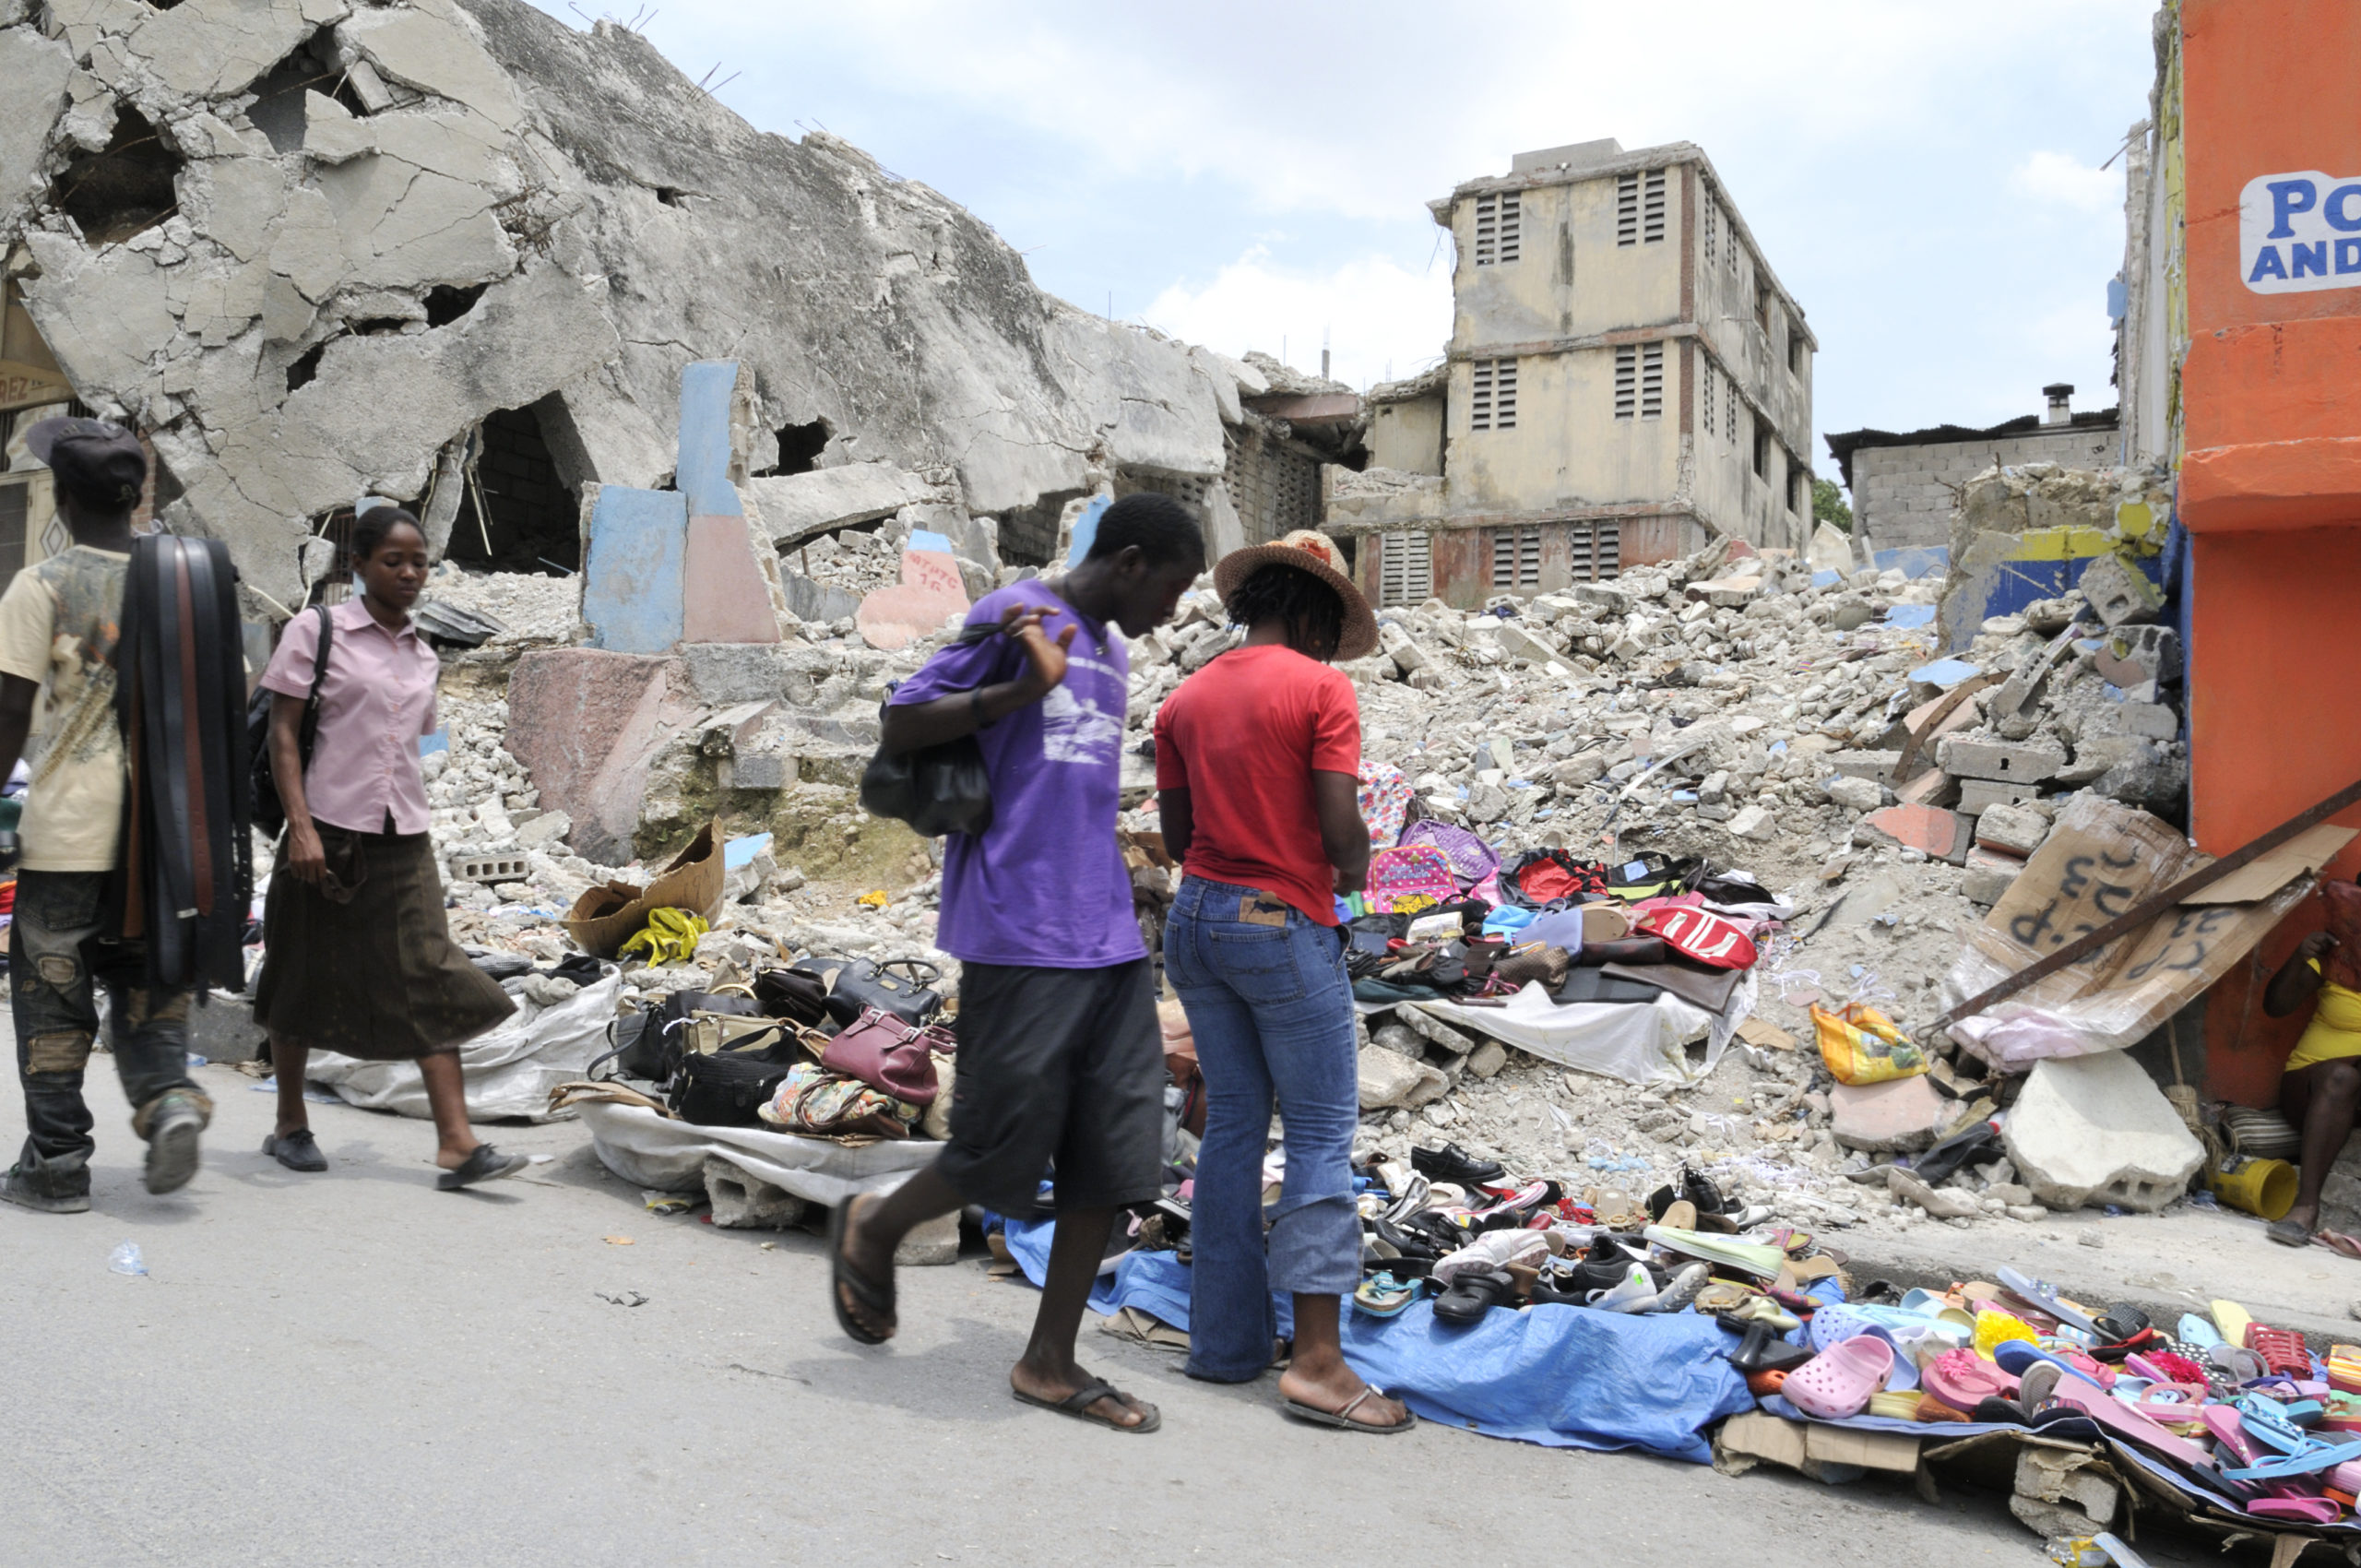 haiti earthquake disaster relief